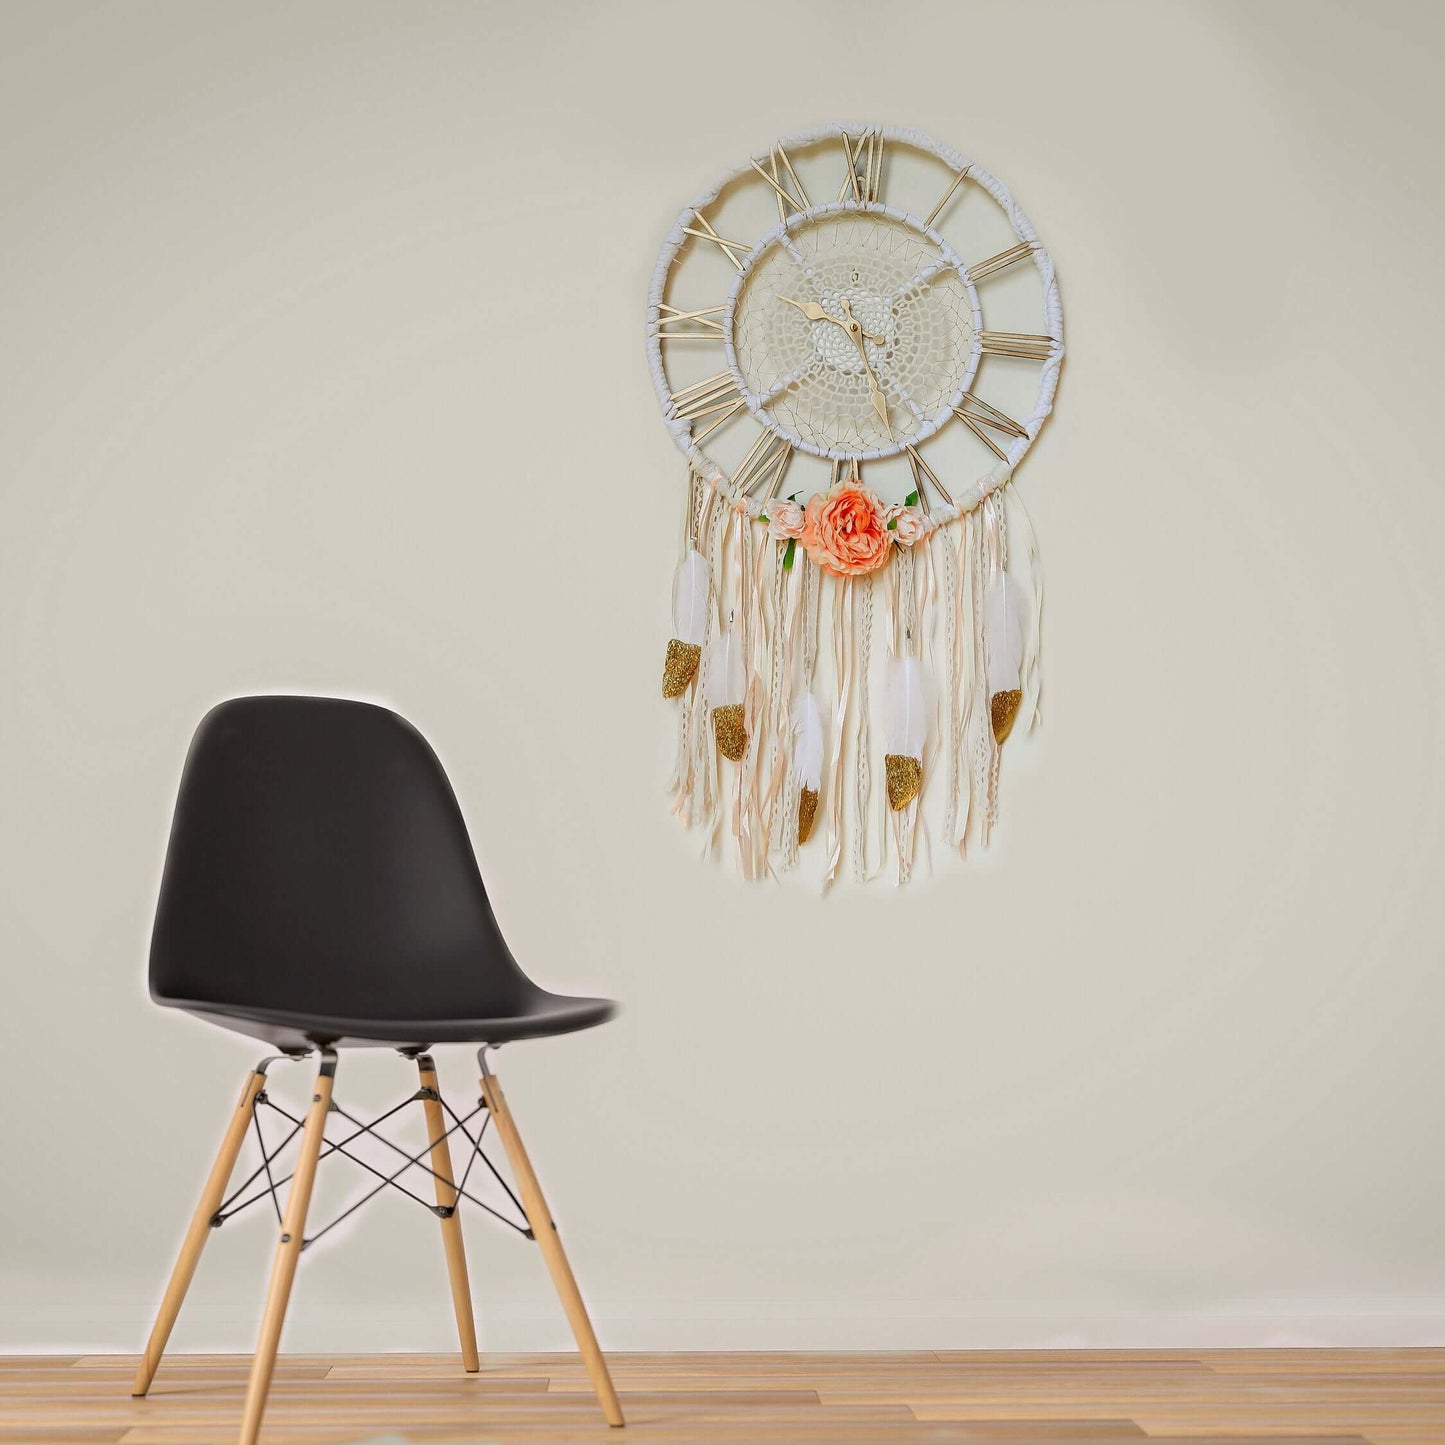 Dream Catcher Inspired Metal Wall Clock | RishStudio RishStudio